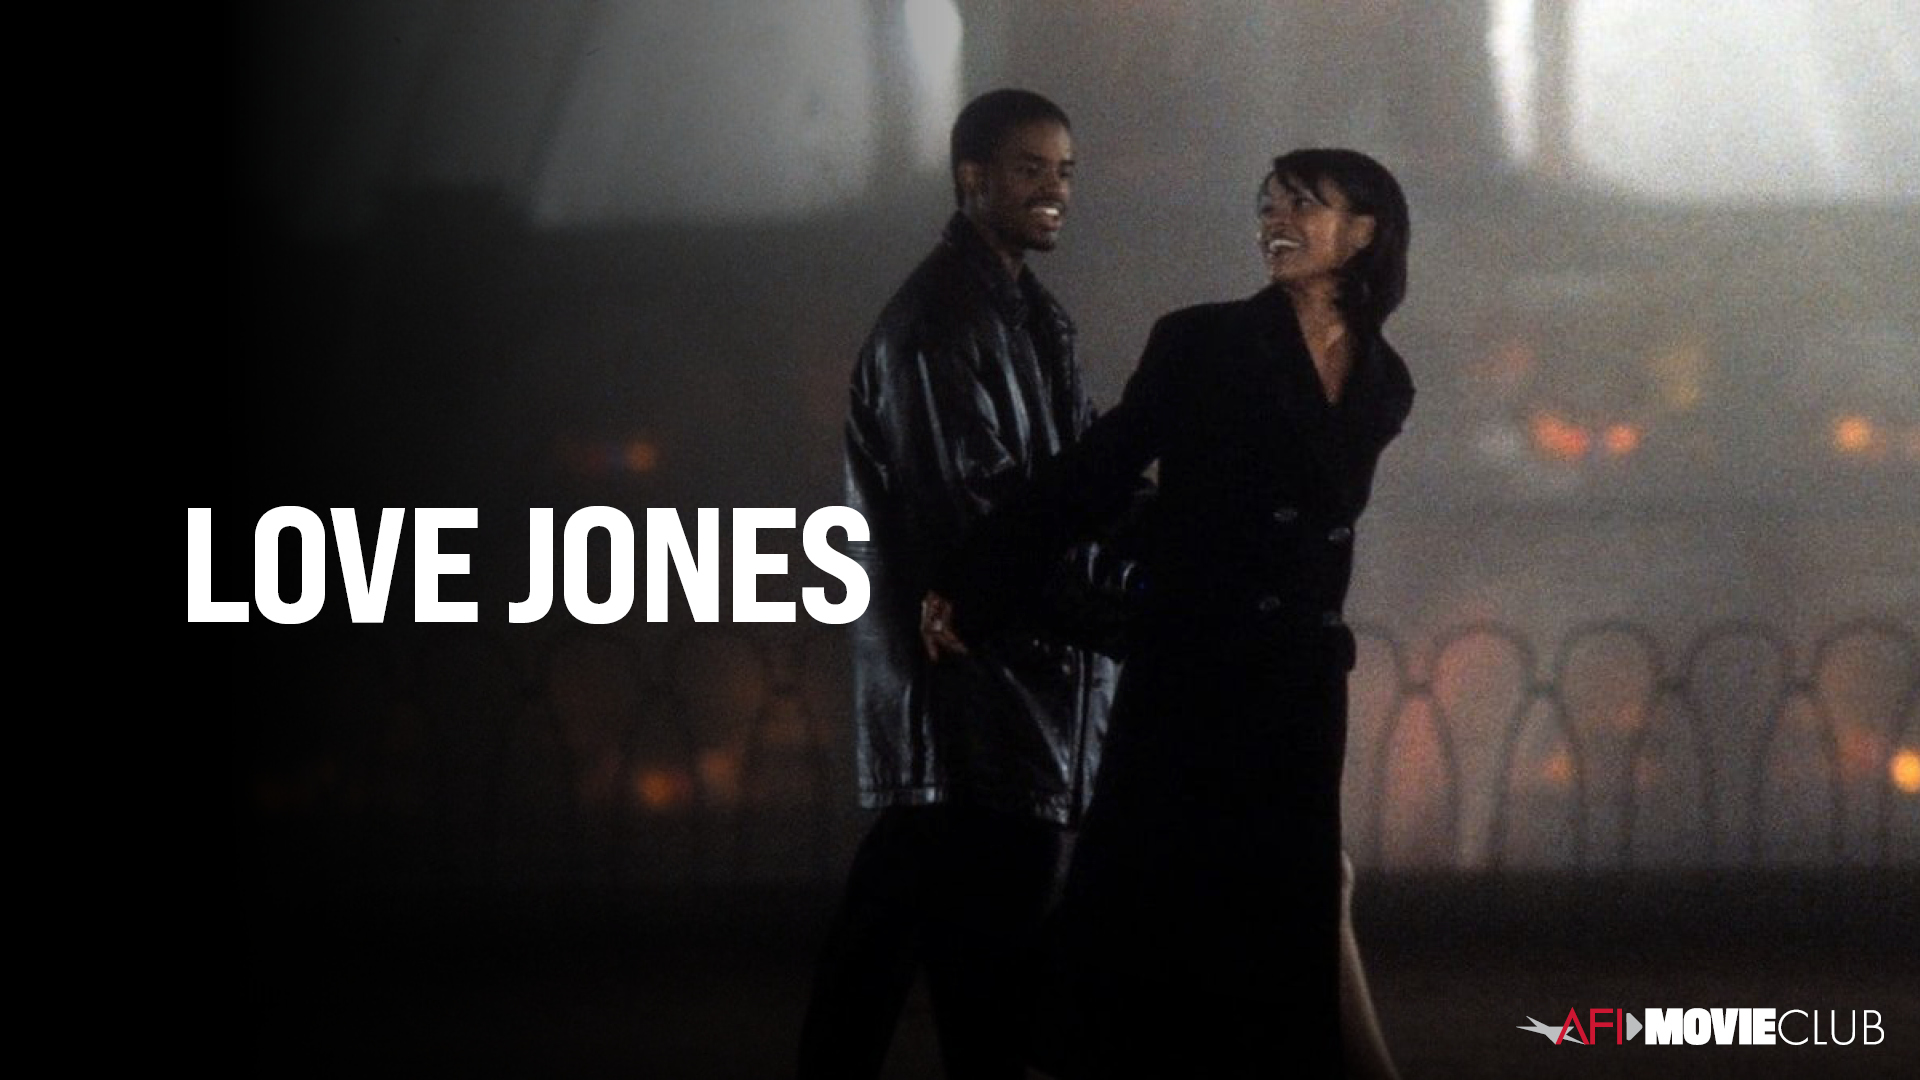 Love Jones Film Still - Nia Long and Larenz Tate